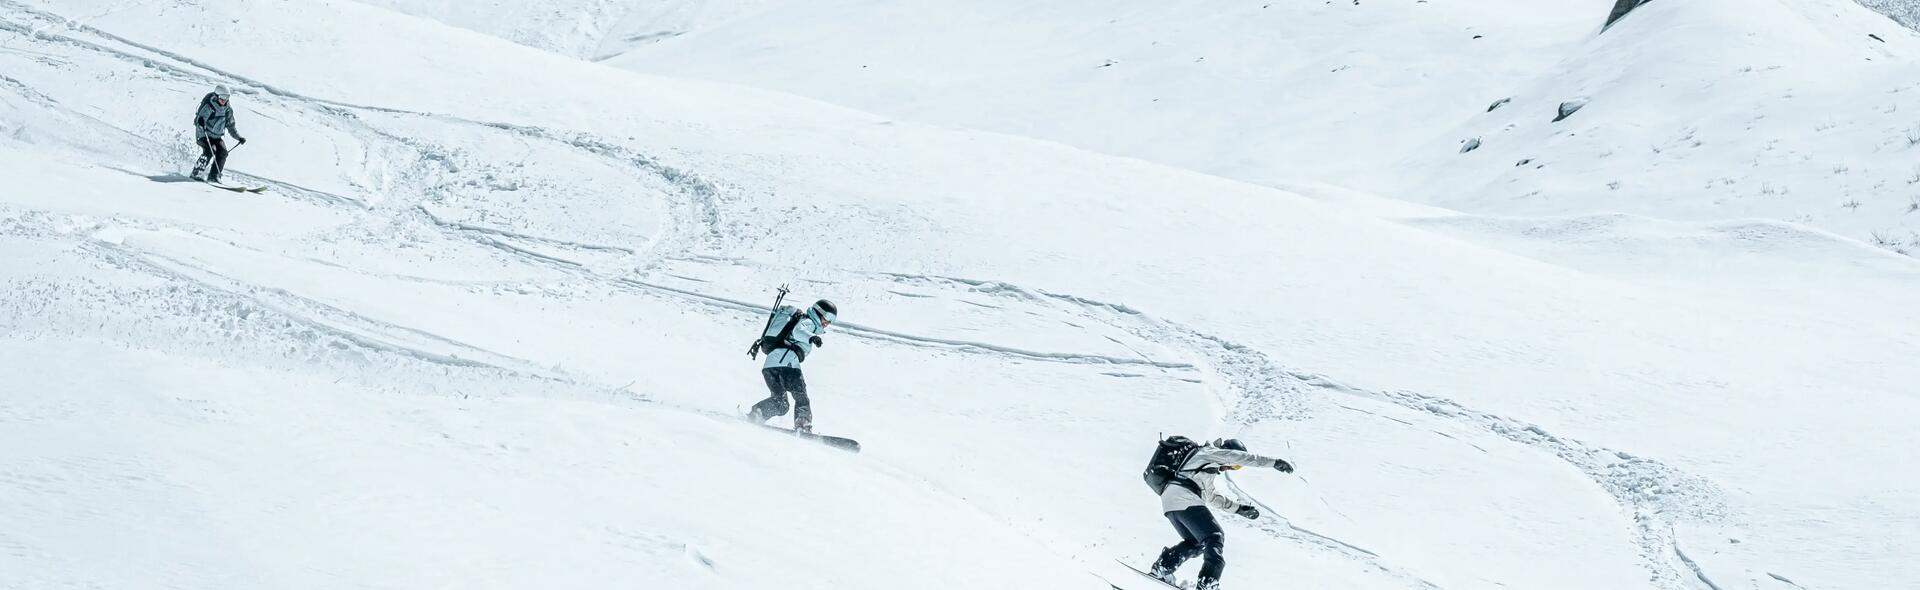 sav ski snow reparation ski snow entretien